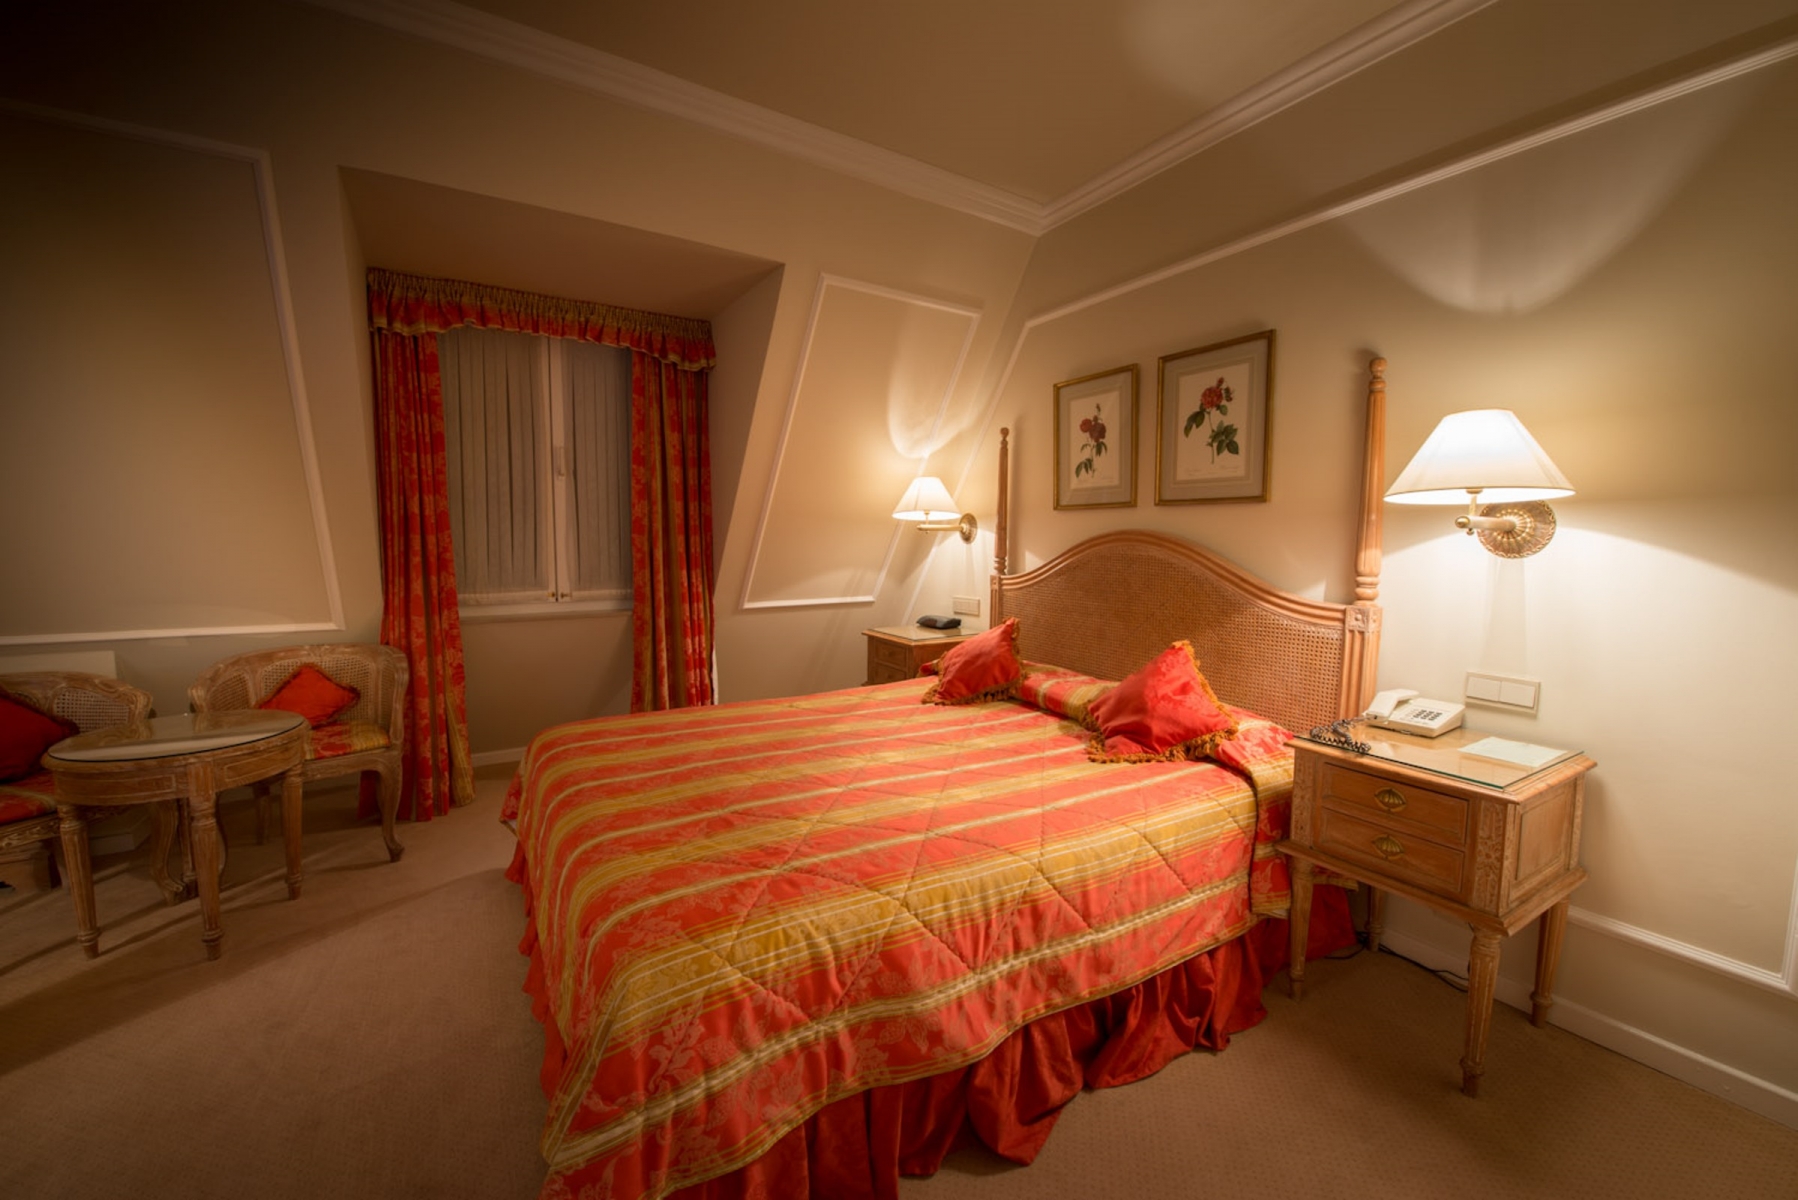 Hotel Manos Stephanie <br/>165.00 ew <br/> <a href='http://vakantieoplossing.nl/outpage/?id=e10041025174e89071bb08dc6b2b88dc' target='_blank'>View Details</a>